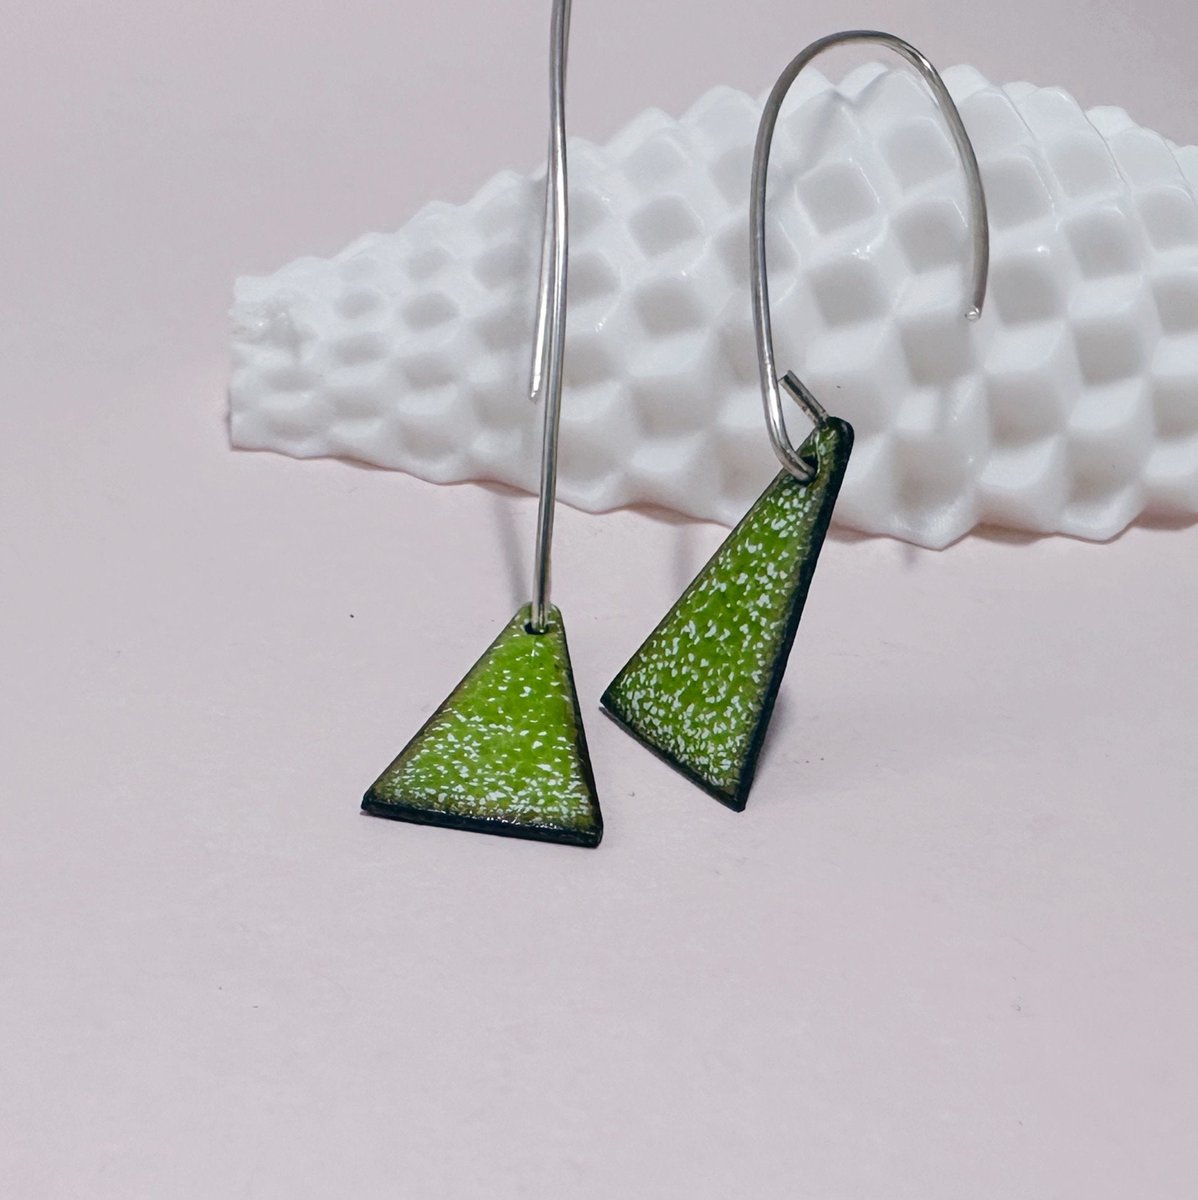 Bright Green Enamel Triangle Shaped Earrings, Geometric Drop Earrings with Silver Ear Wires maisyplum.etsy.com/listing/150822… #ShopIndie #MyNewTag #MaisyPlum #UKCraftersHour #Etsy #MHHSBD #TriangleEarrings